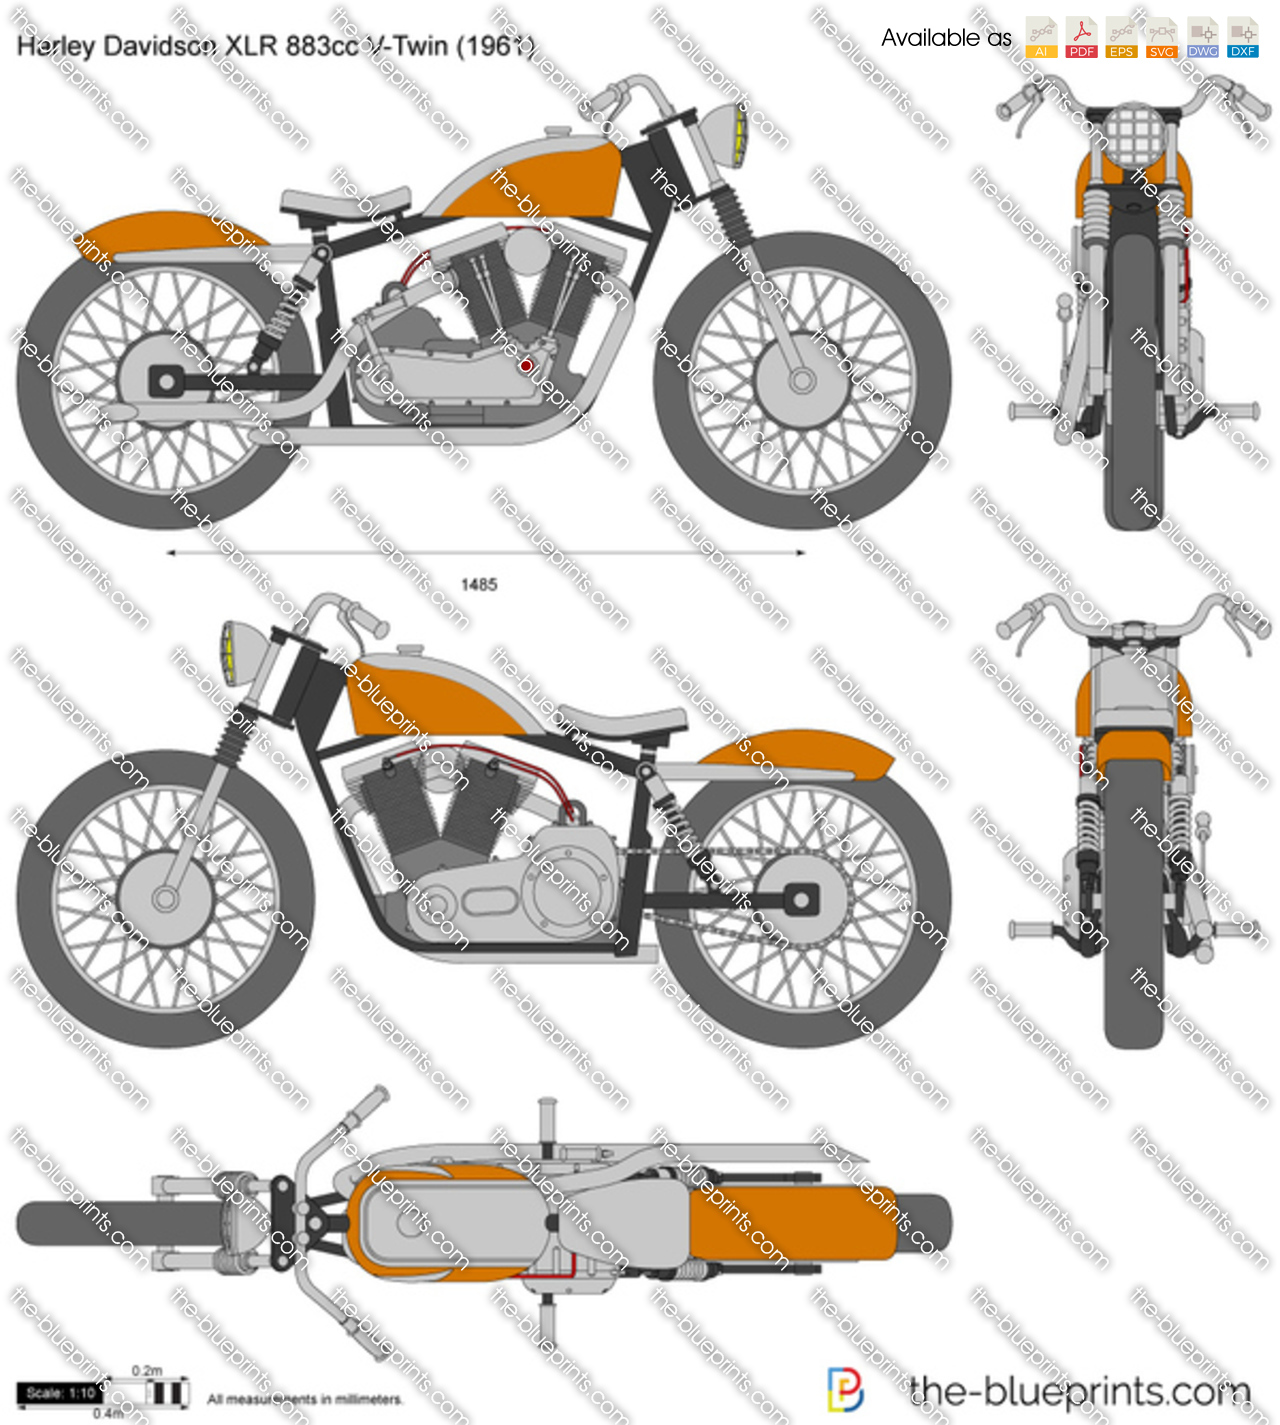 Harley Davidson XLR 883cc V-Twin